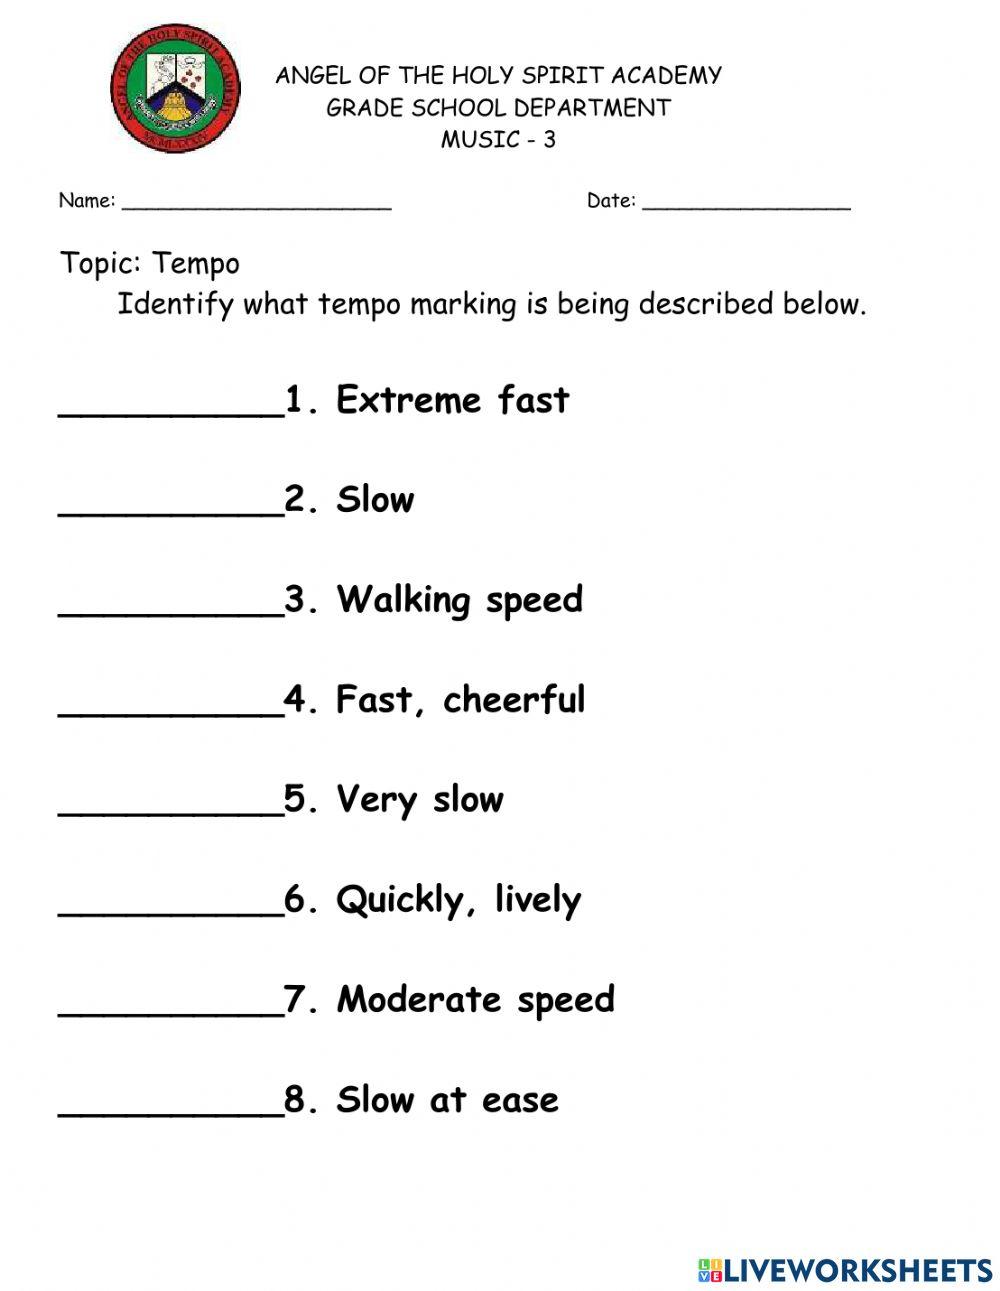 Tempo markings